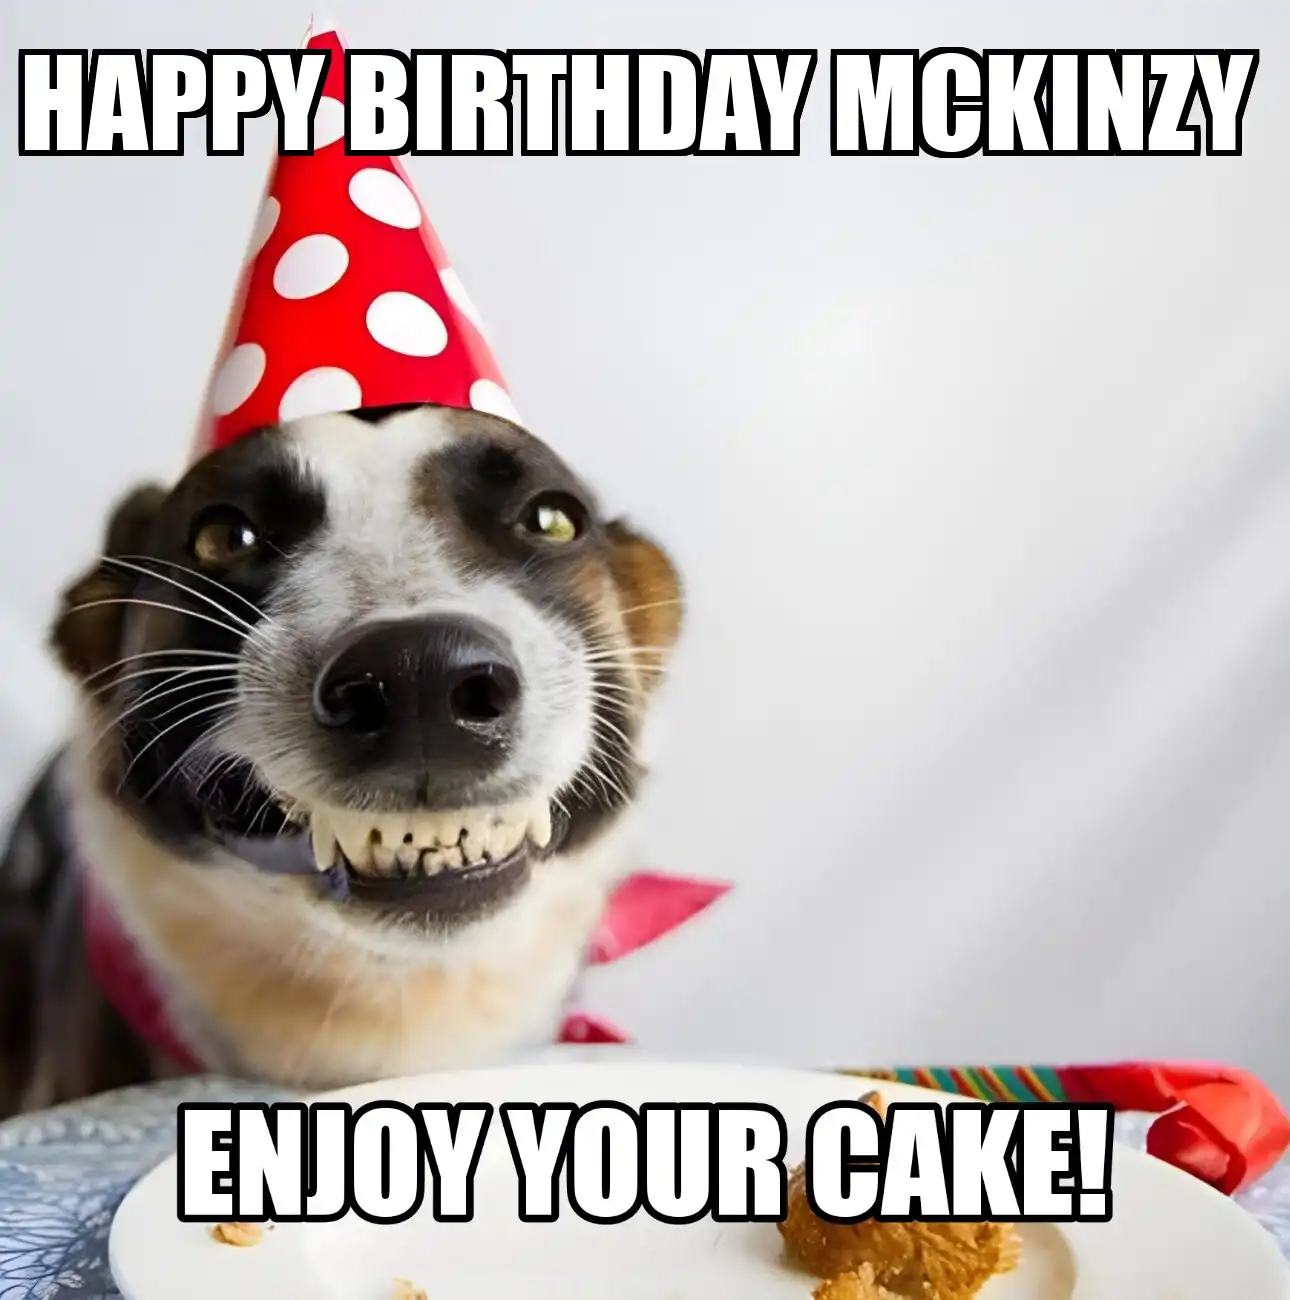 Happy Birthday Mckinzy Enjoy Your Cake Dog Meme